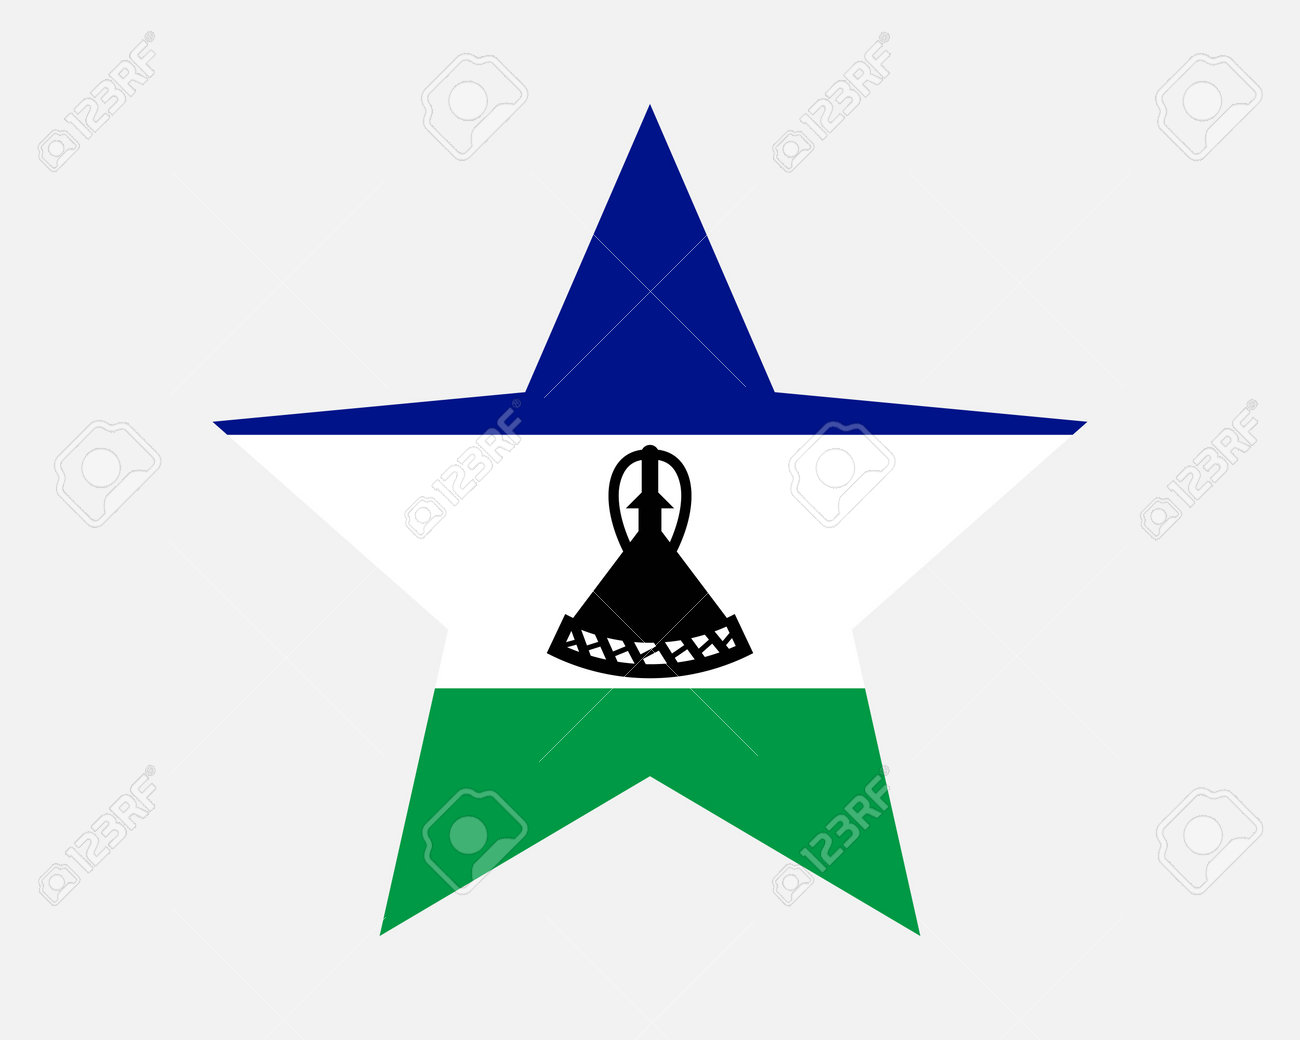 Lesotho star flag kingdom of lesotho star shape flag mosotho basotho country national banner icon symbol vector flat artwork graphic illustration royalty free svg cliparts vectors and stock illustration image